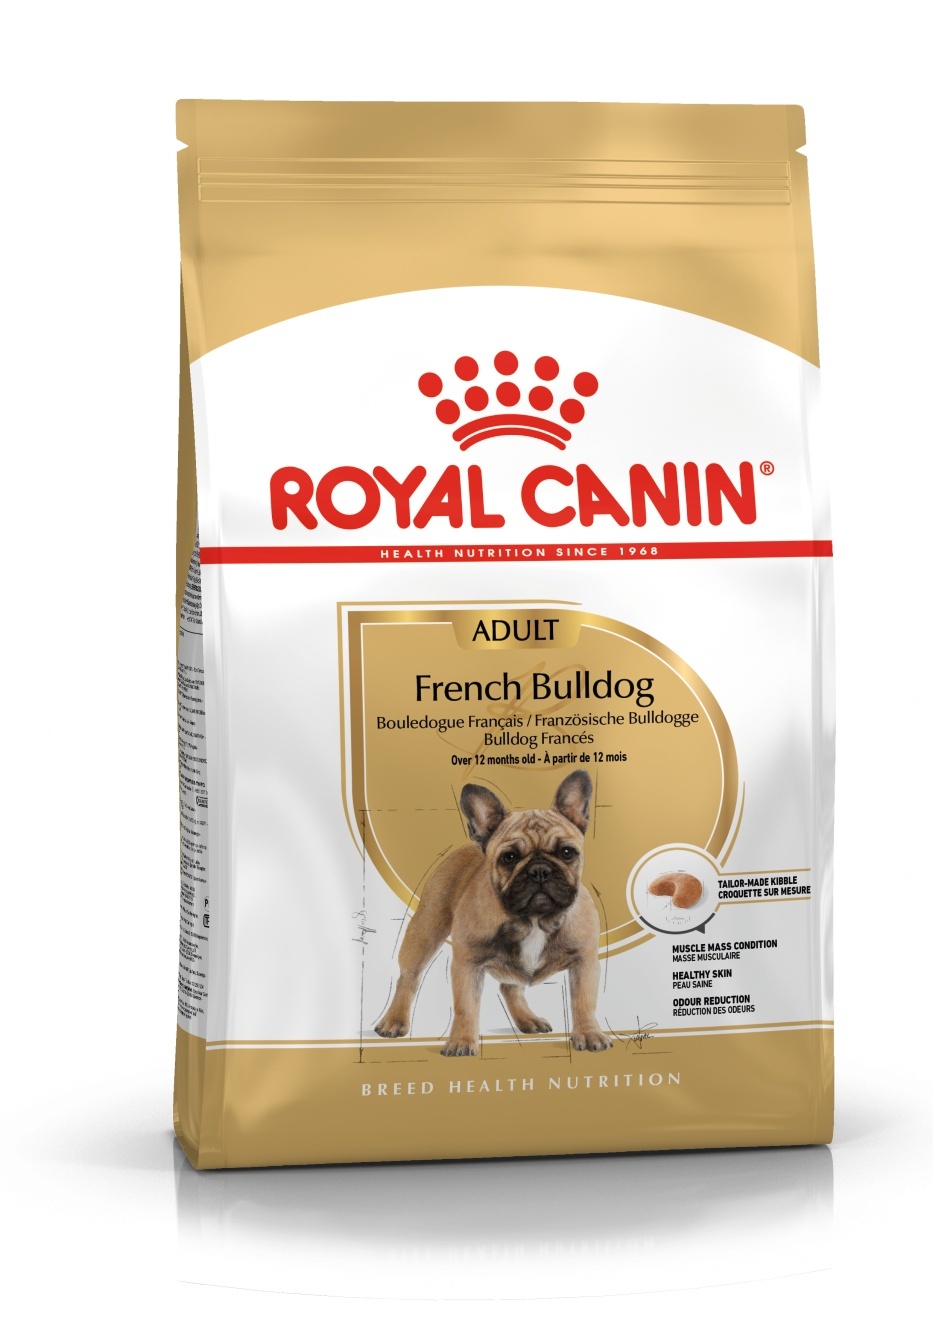 Для взрослого французского бульдога с 12 мес. (3 кг) Royal Canin (сухие корма) Для взрослого французского бульдога с 12 мес. (3 кг) - фото 1